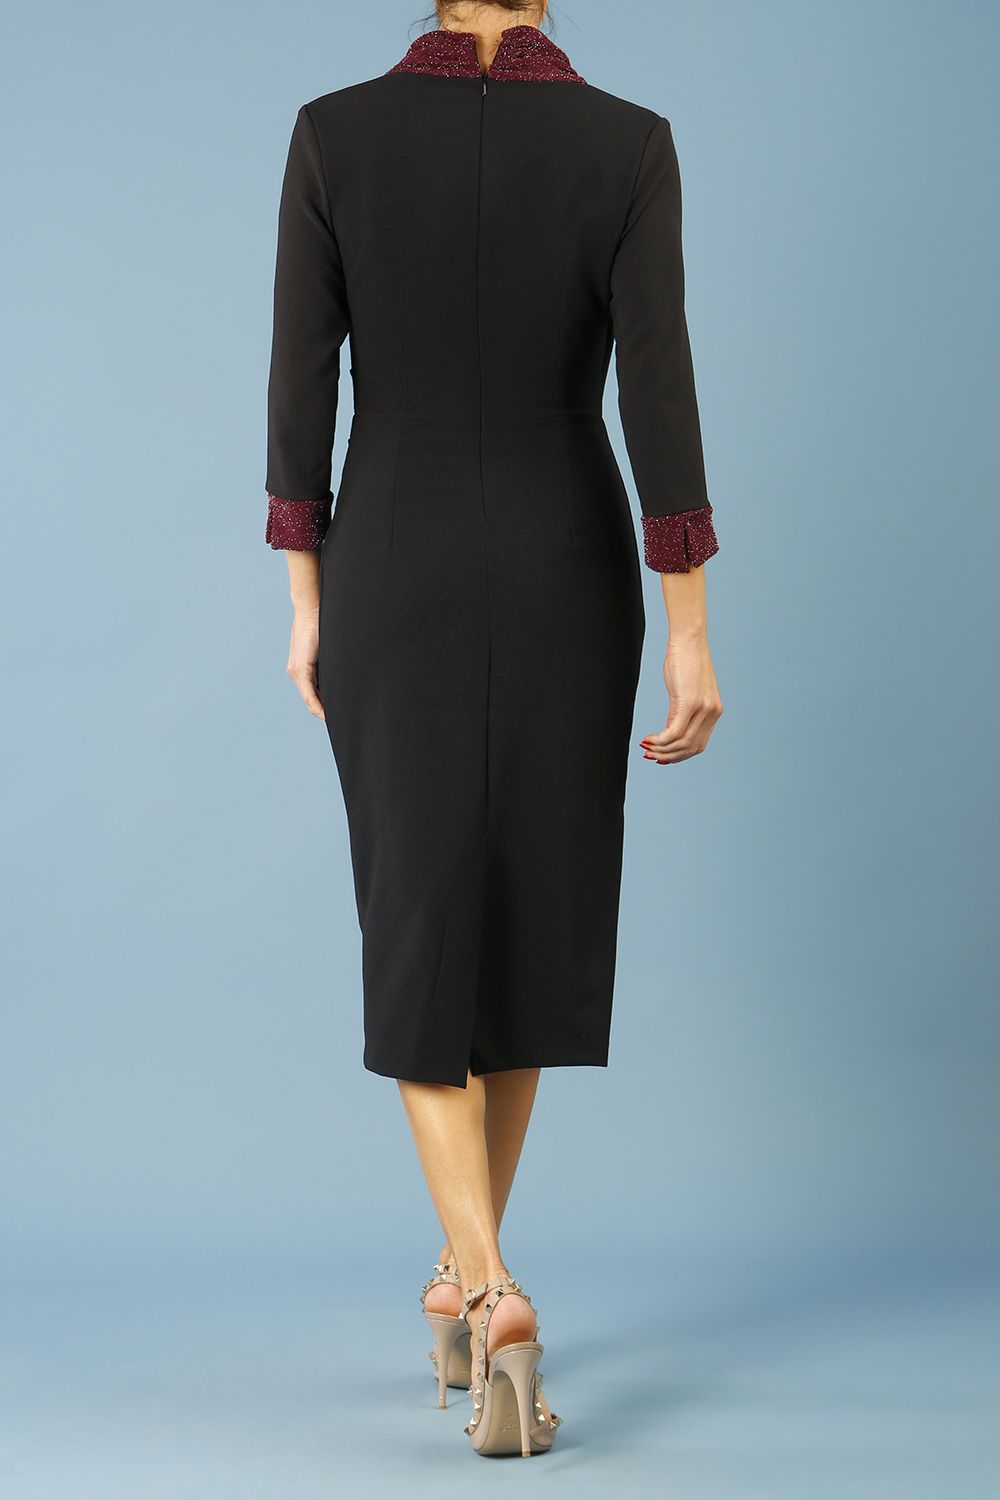 model is wearing diva catwalk osaka black pencil dress with sparkle contrasting detail on sleeves and v-neckline in black and burgundy back